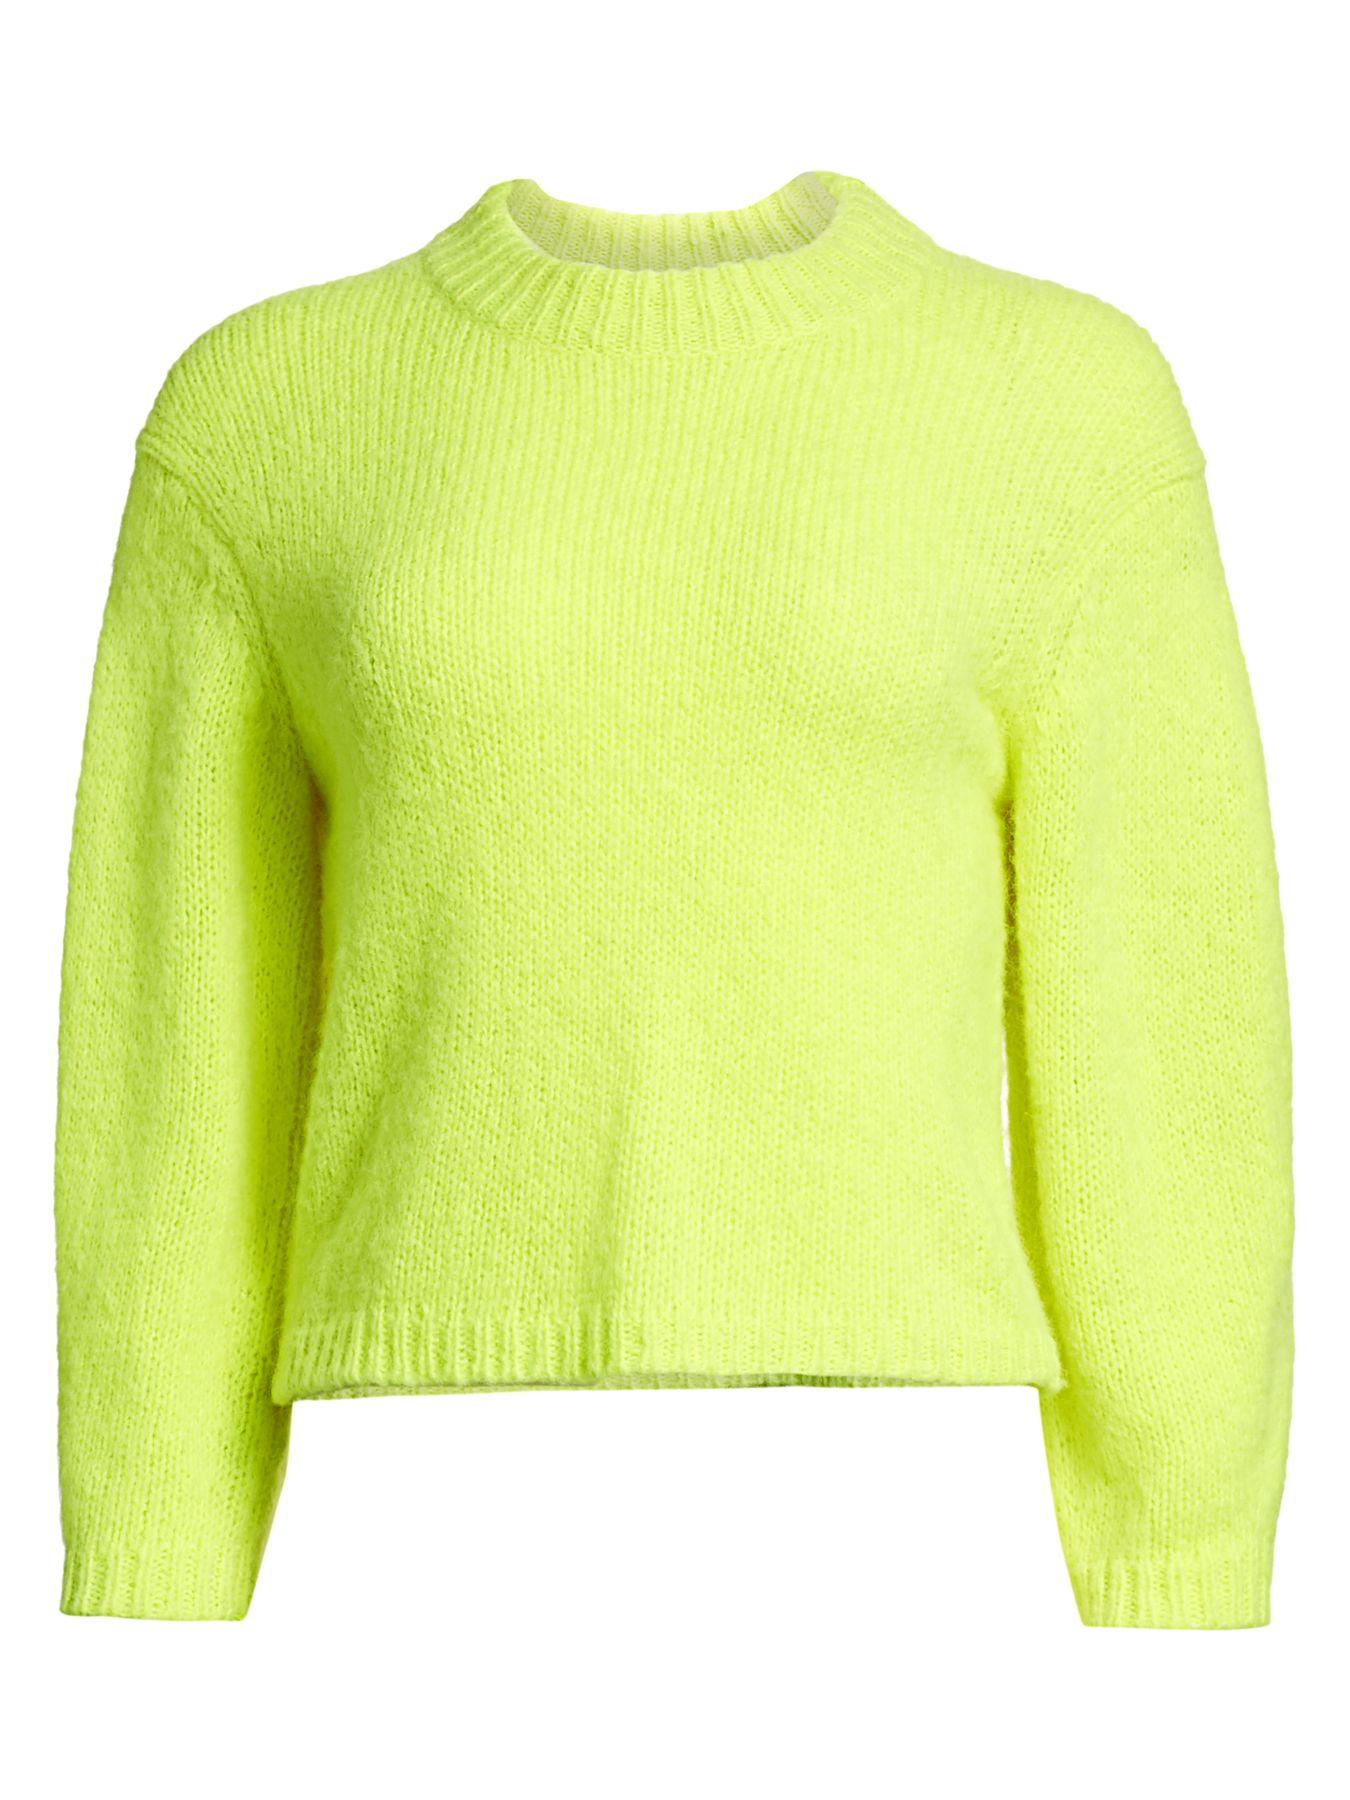 Tibi Wool Cozette Neon Alpaca-blend Sweater in Lemon Yellow (Yellow) - Lyst